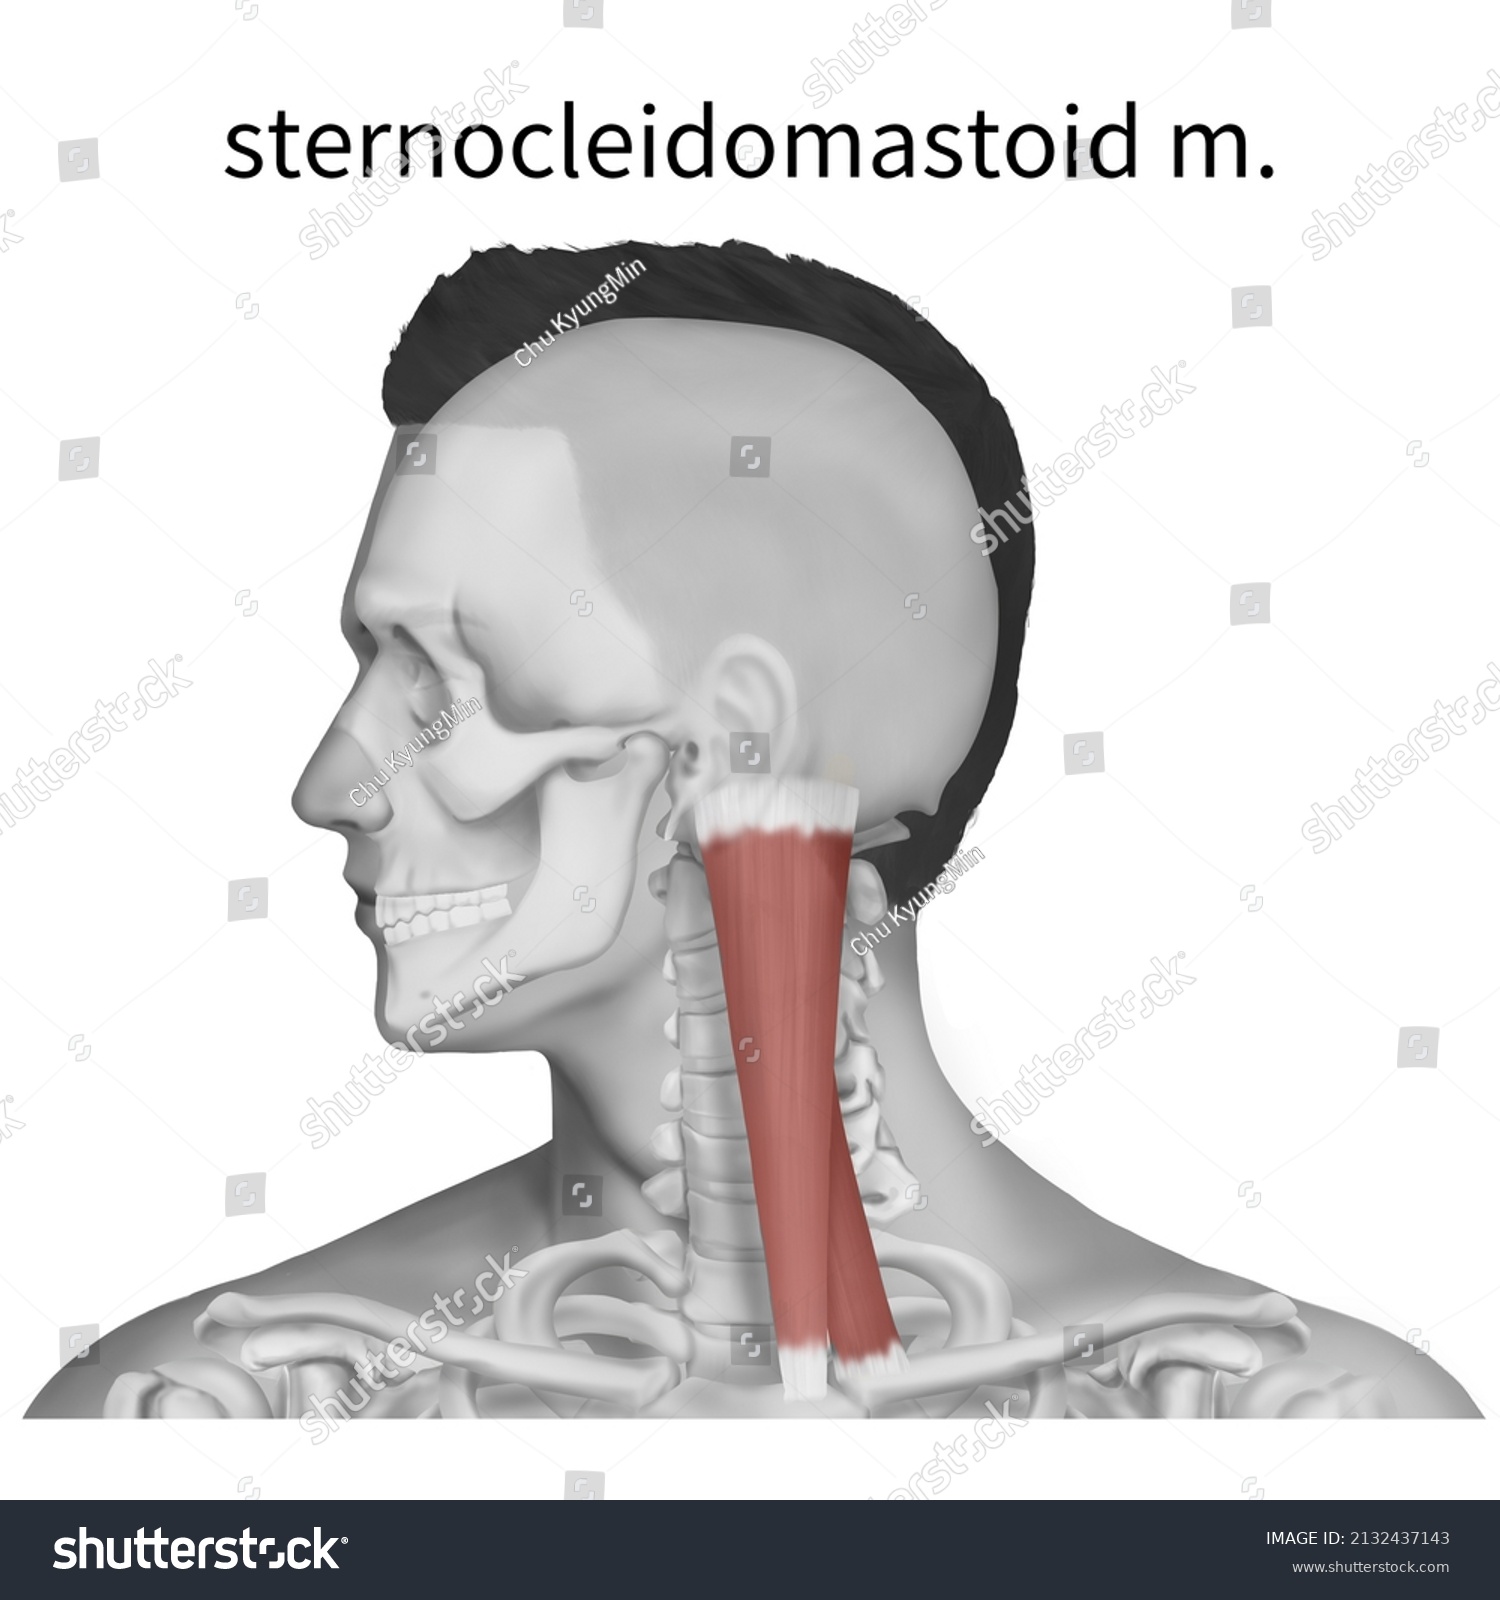 3d Medical Illustration Explaining Sternocleidomastoid Muscle Stock Illustration 2132437143 6838